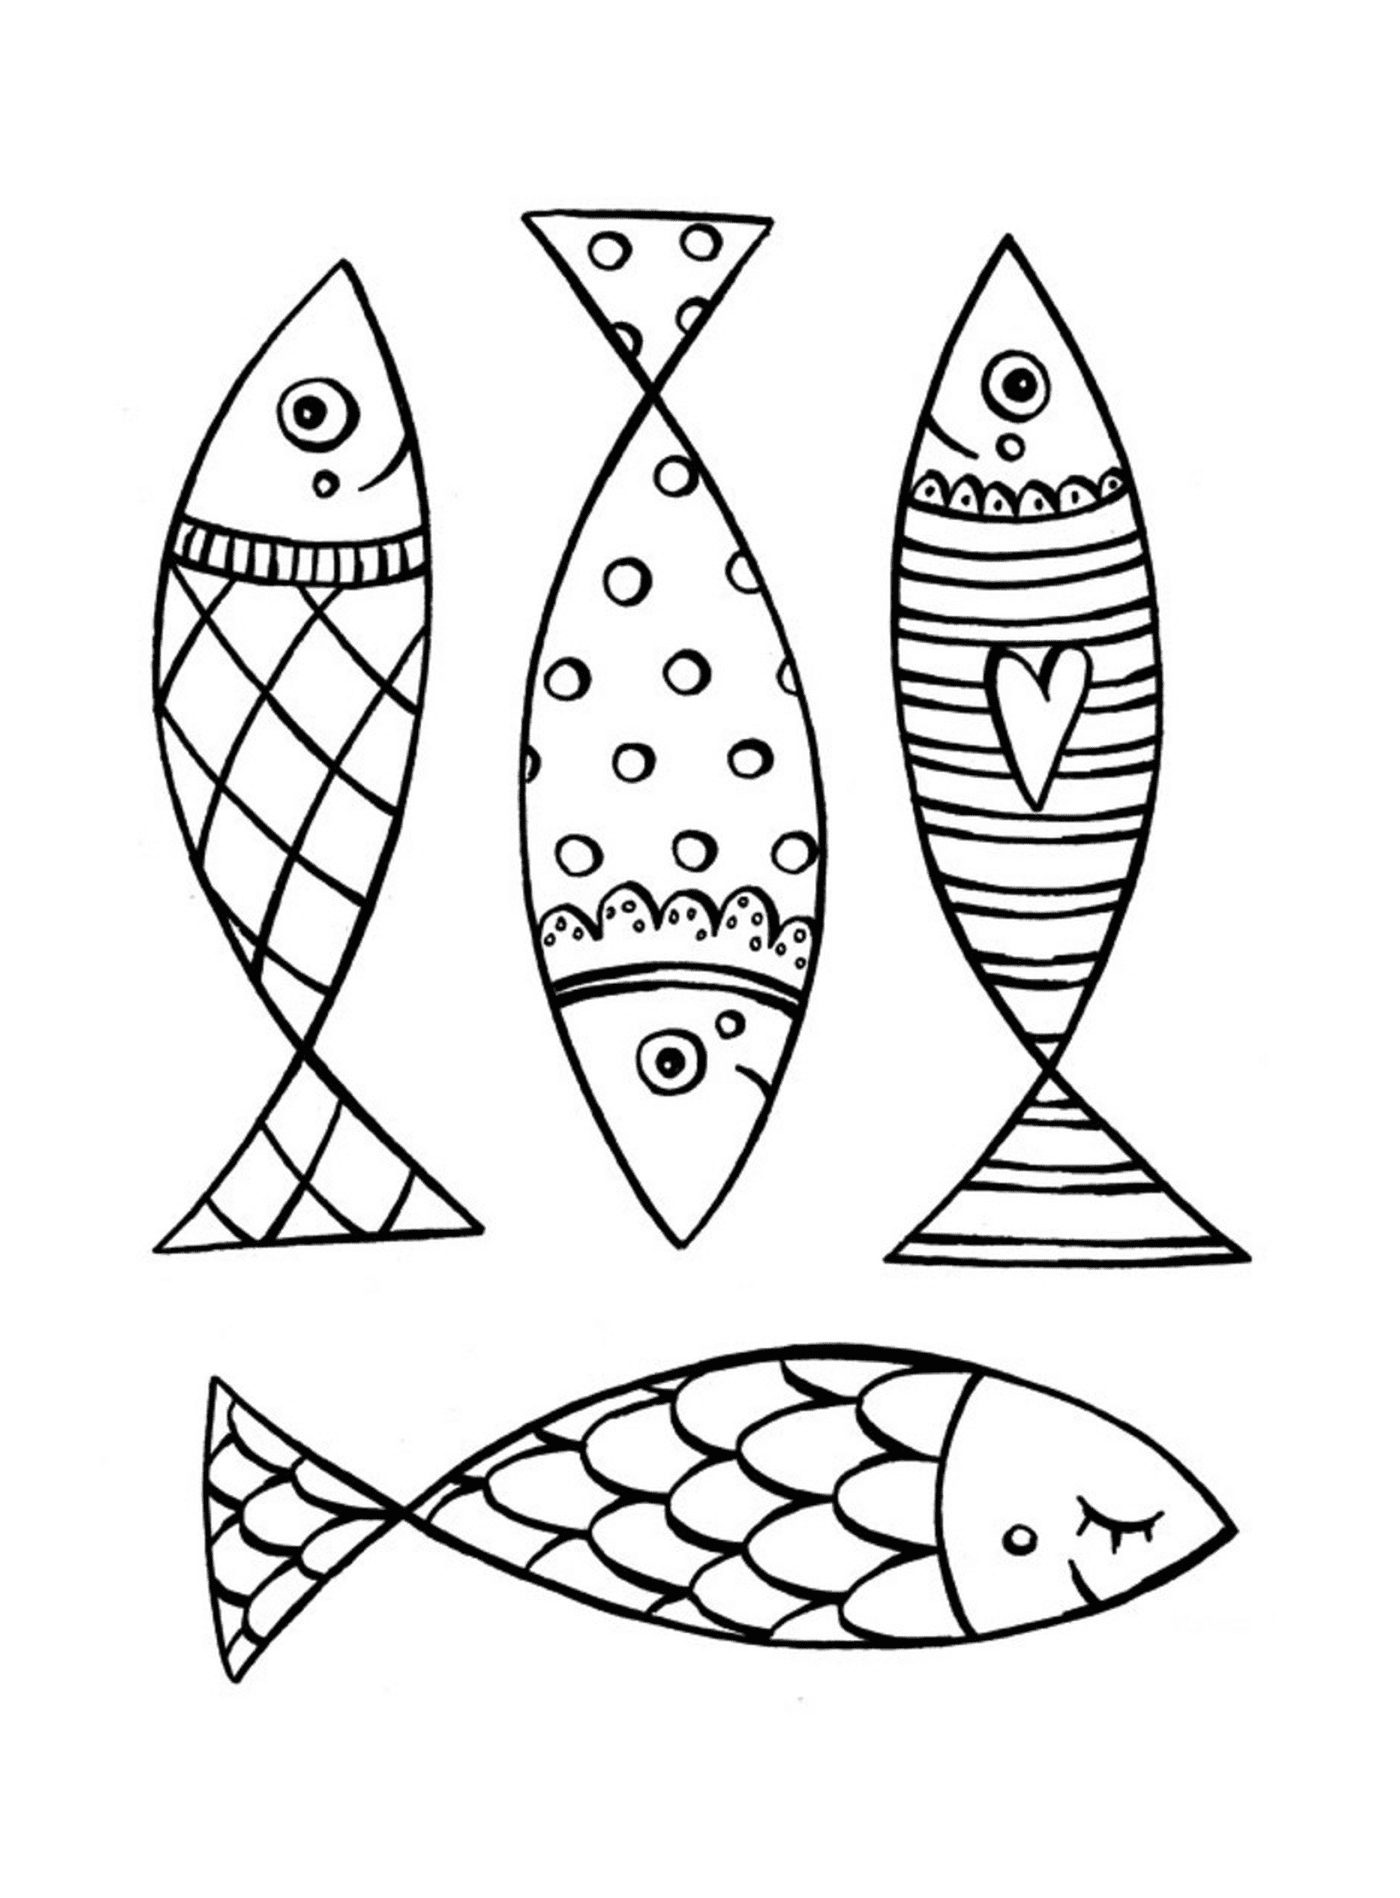  Great April fish with unique patterns 